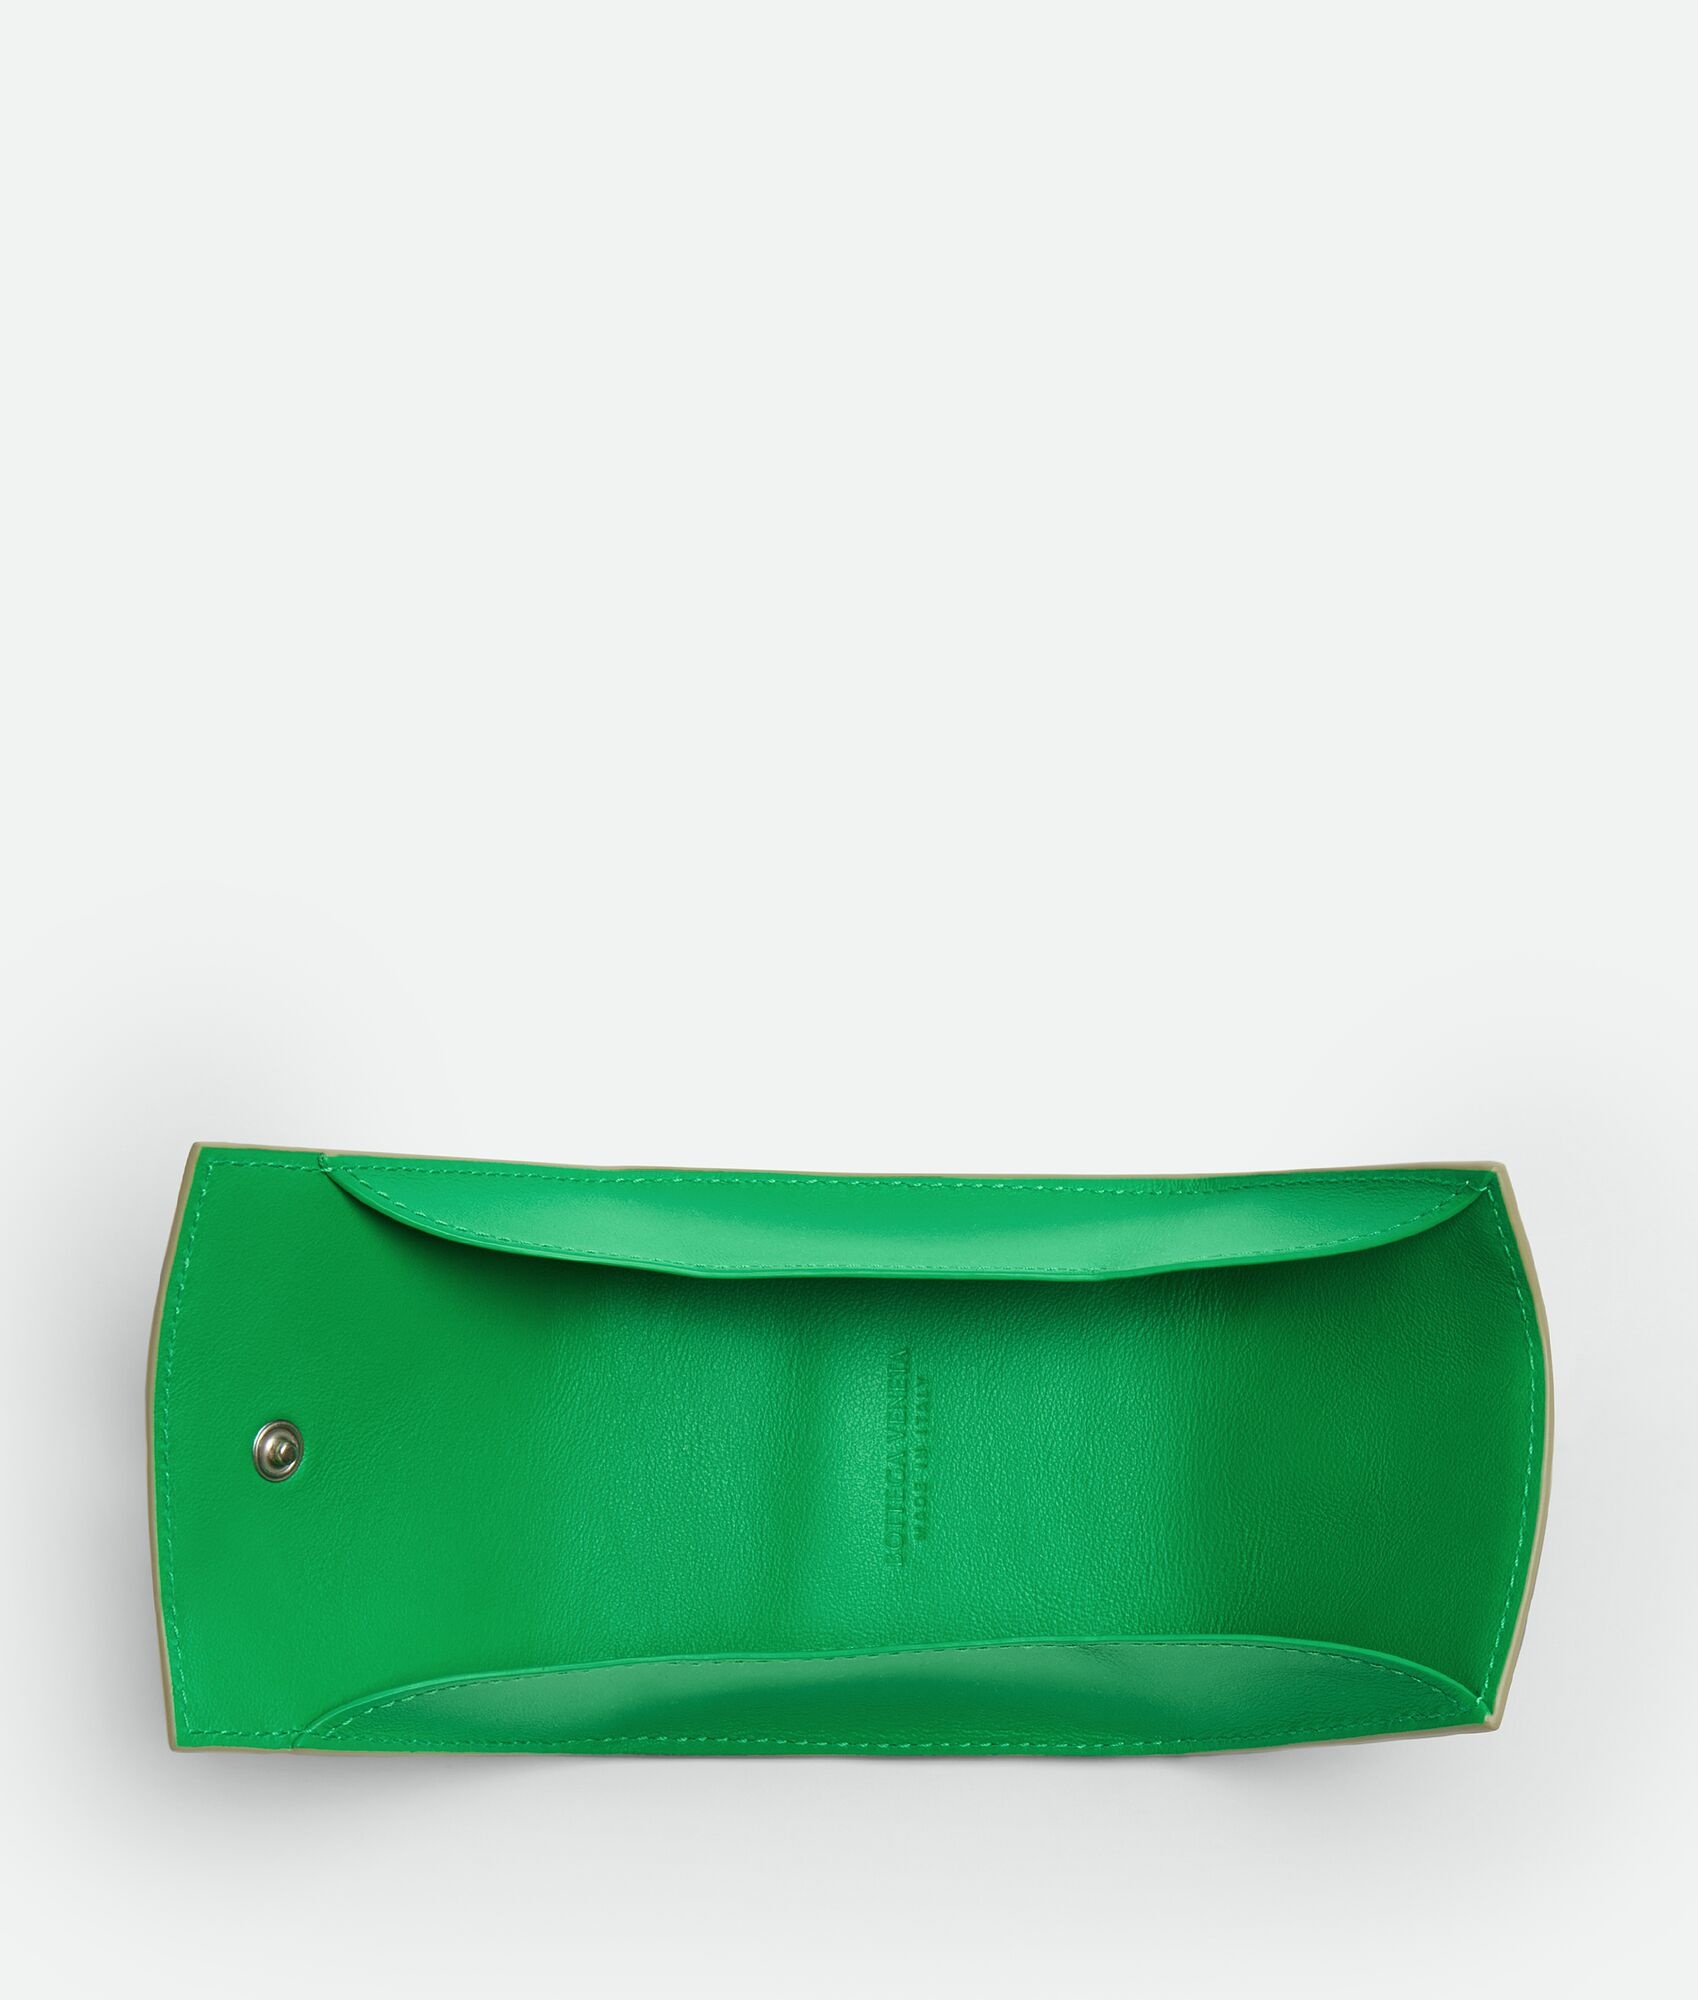 folded coin purse - 2